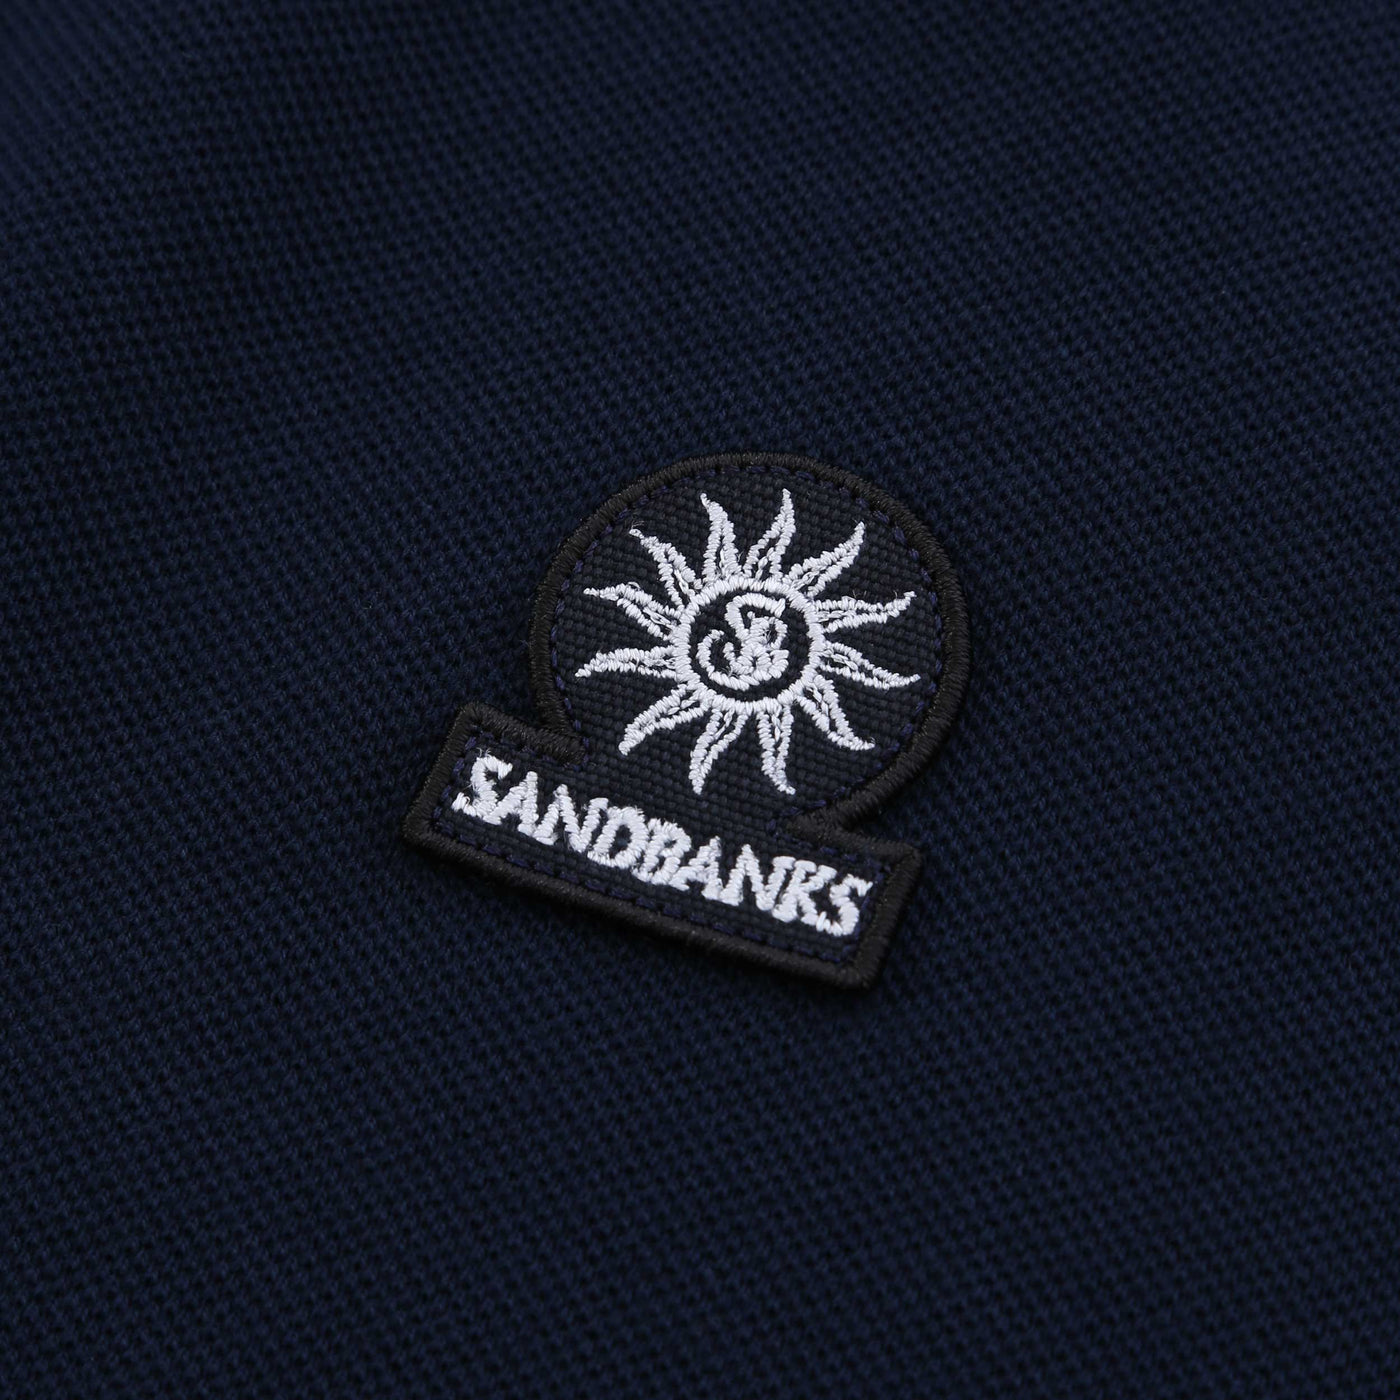 Sandbanks Badge Logo Tipped Polo Shirt in Navy